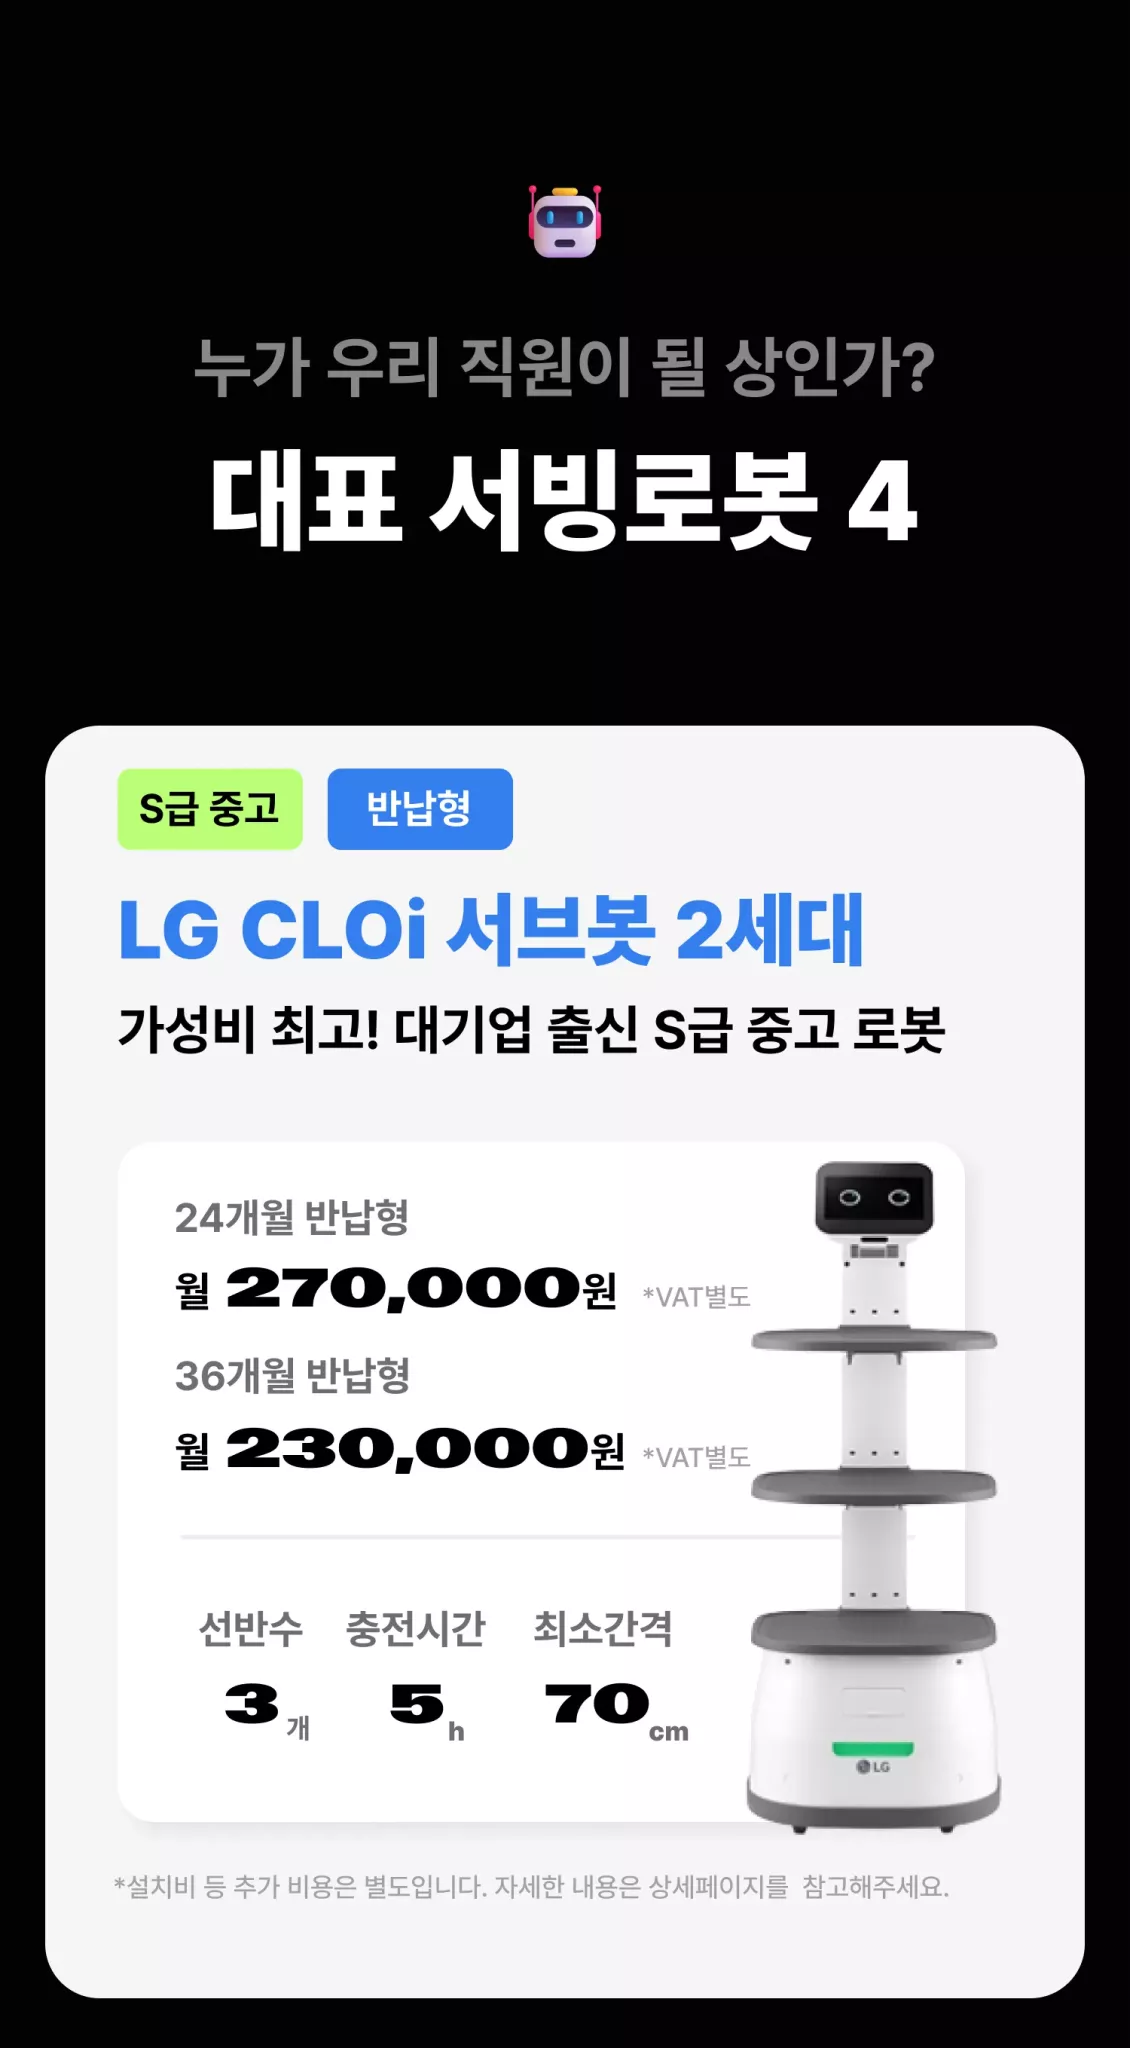 LG CLOi 서브봇 2세대